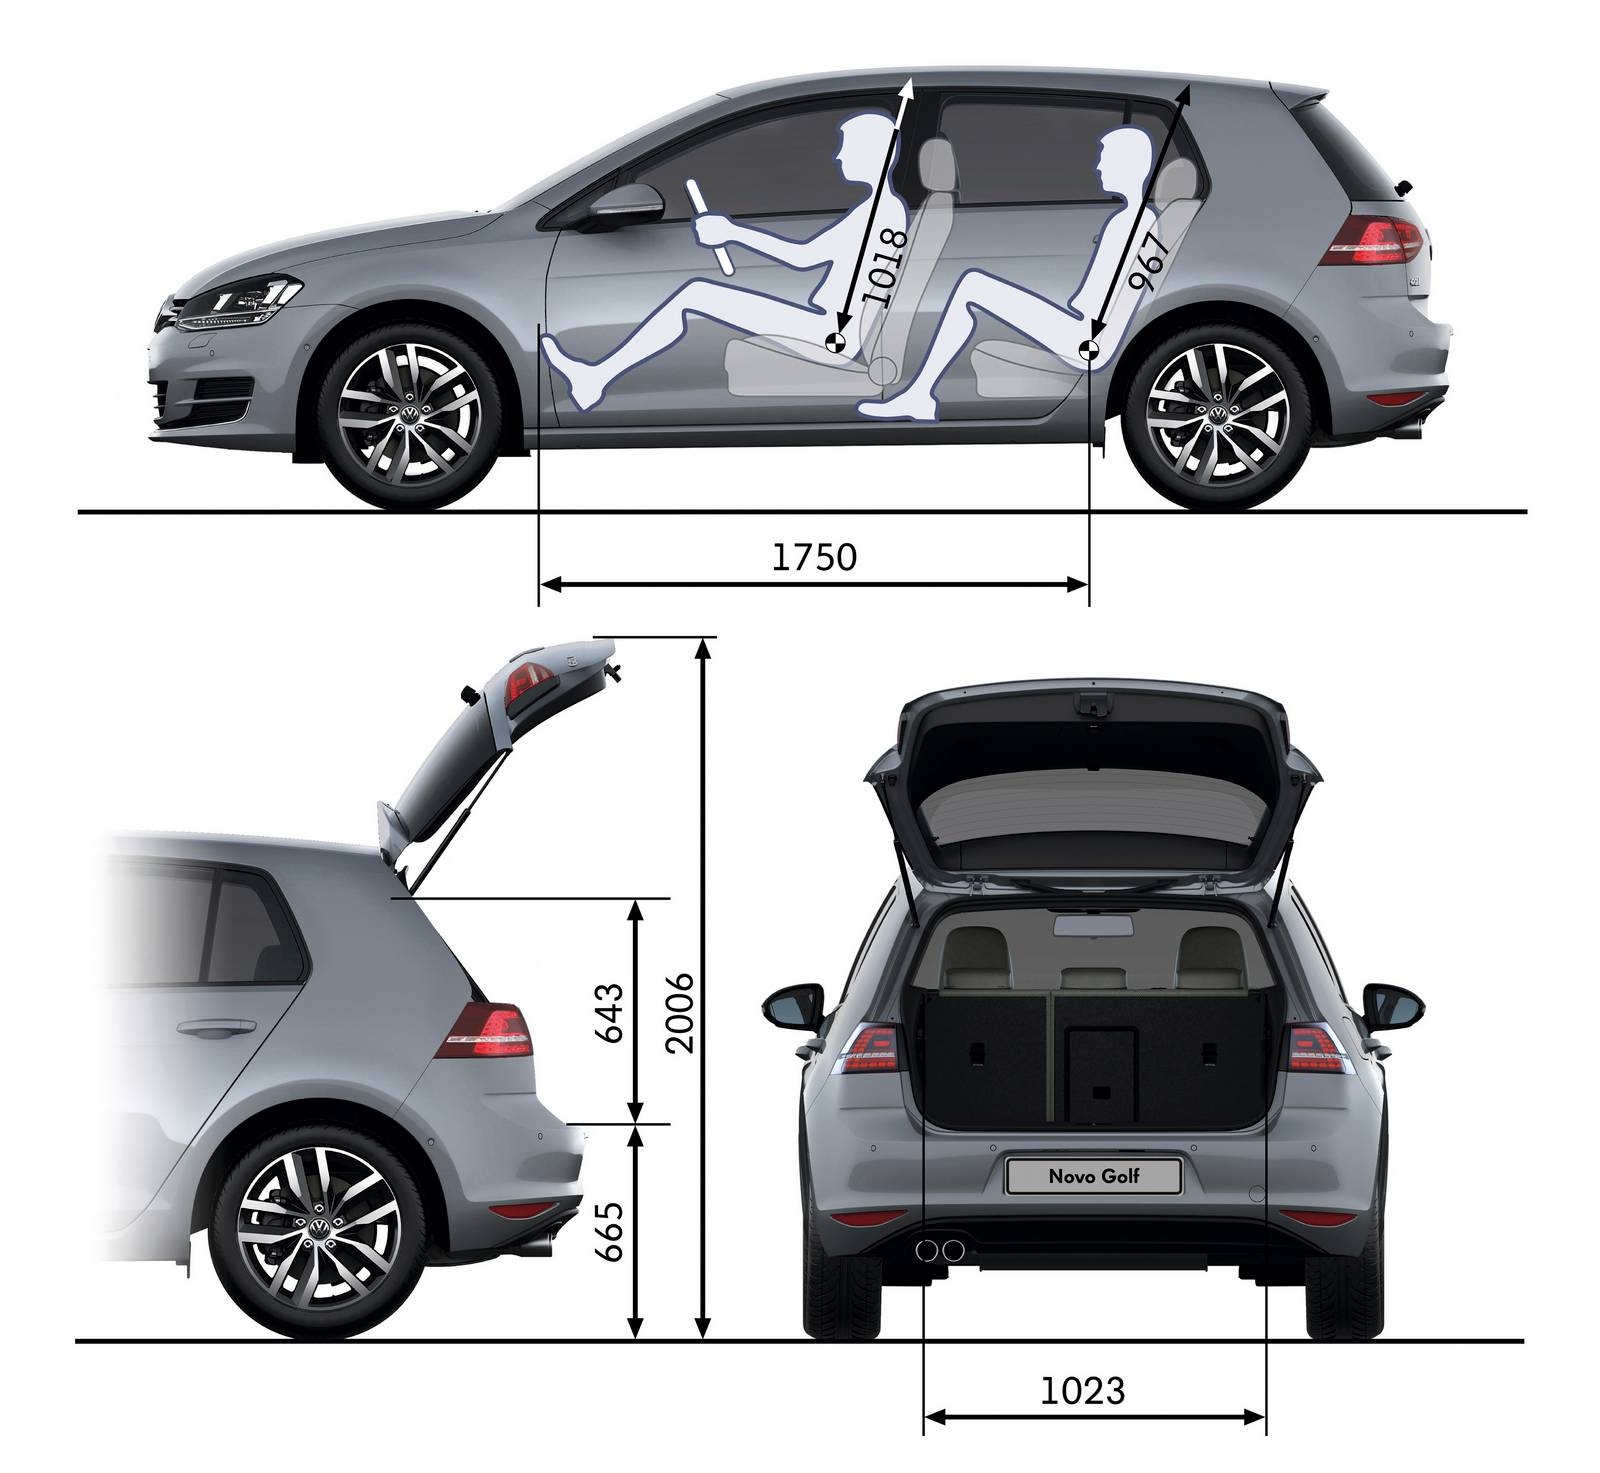 VW Golf 1.0 TSI: dimensões do hatch médio